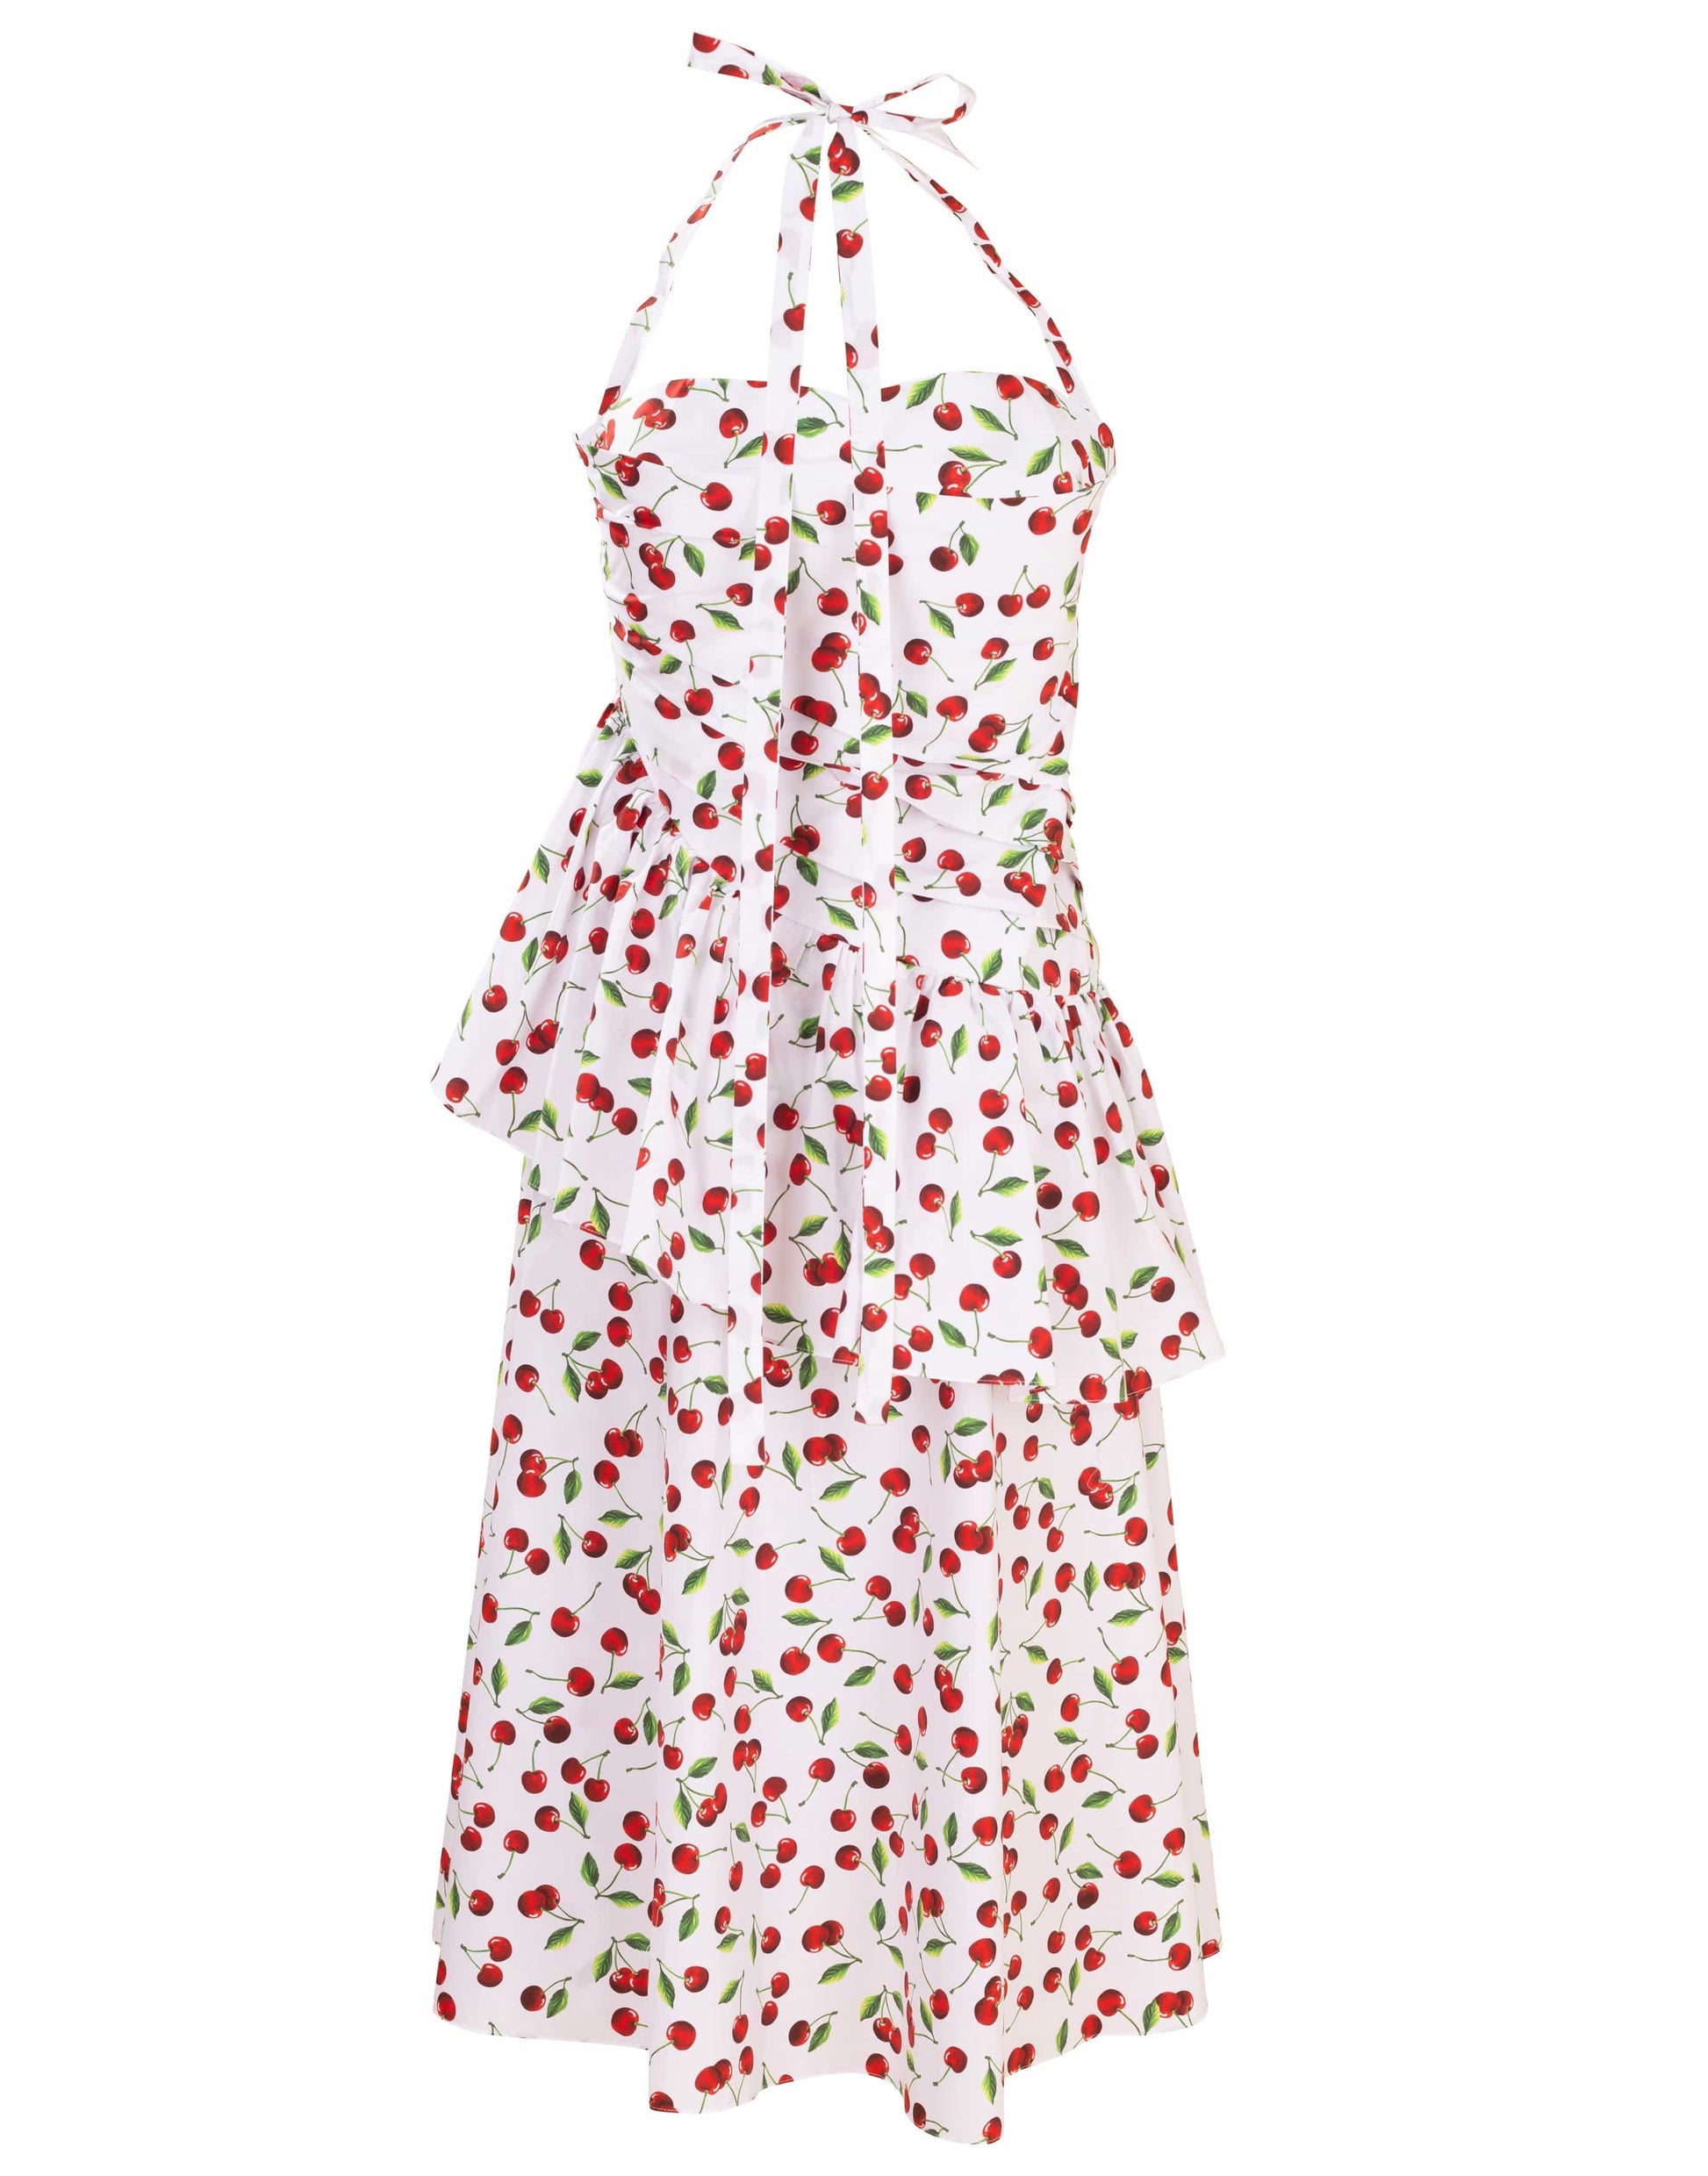 MICHAEL KORS-Cherry Print Ruched Peplum Halter Dress-